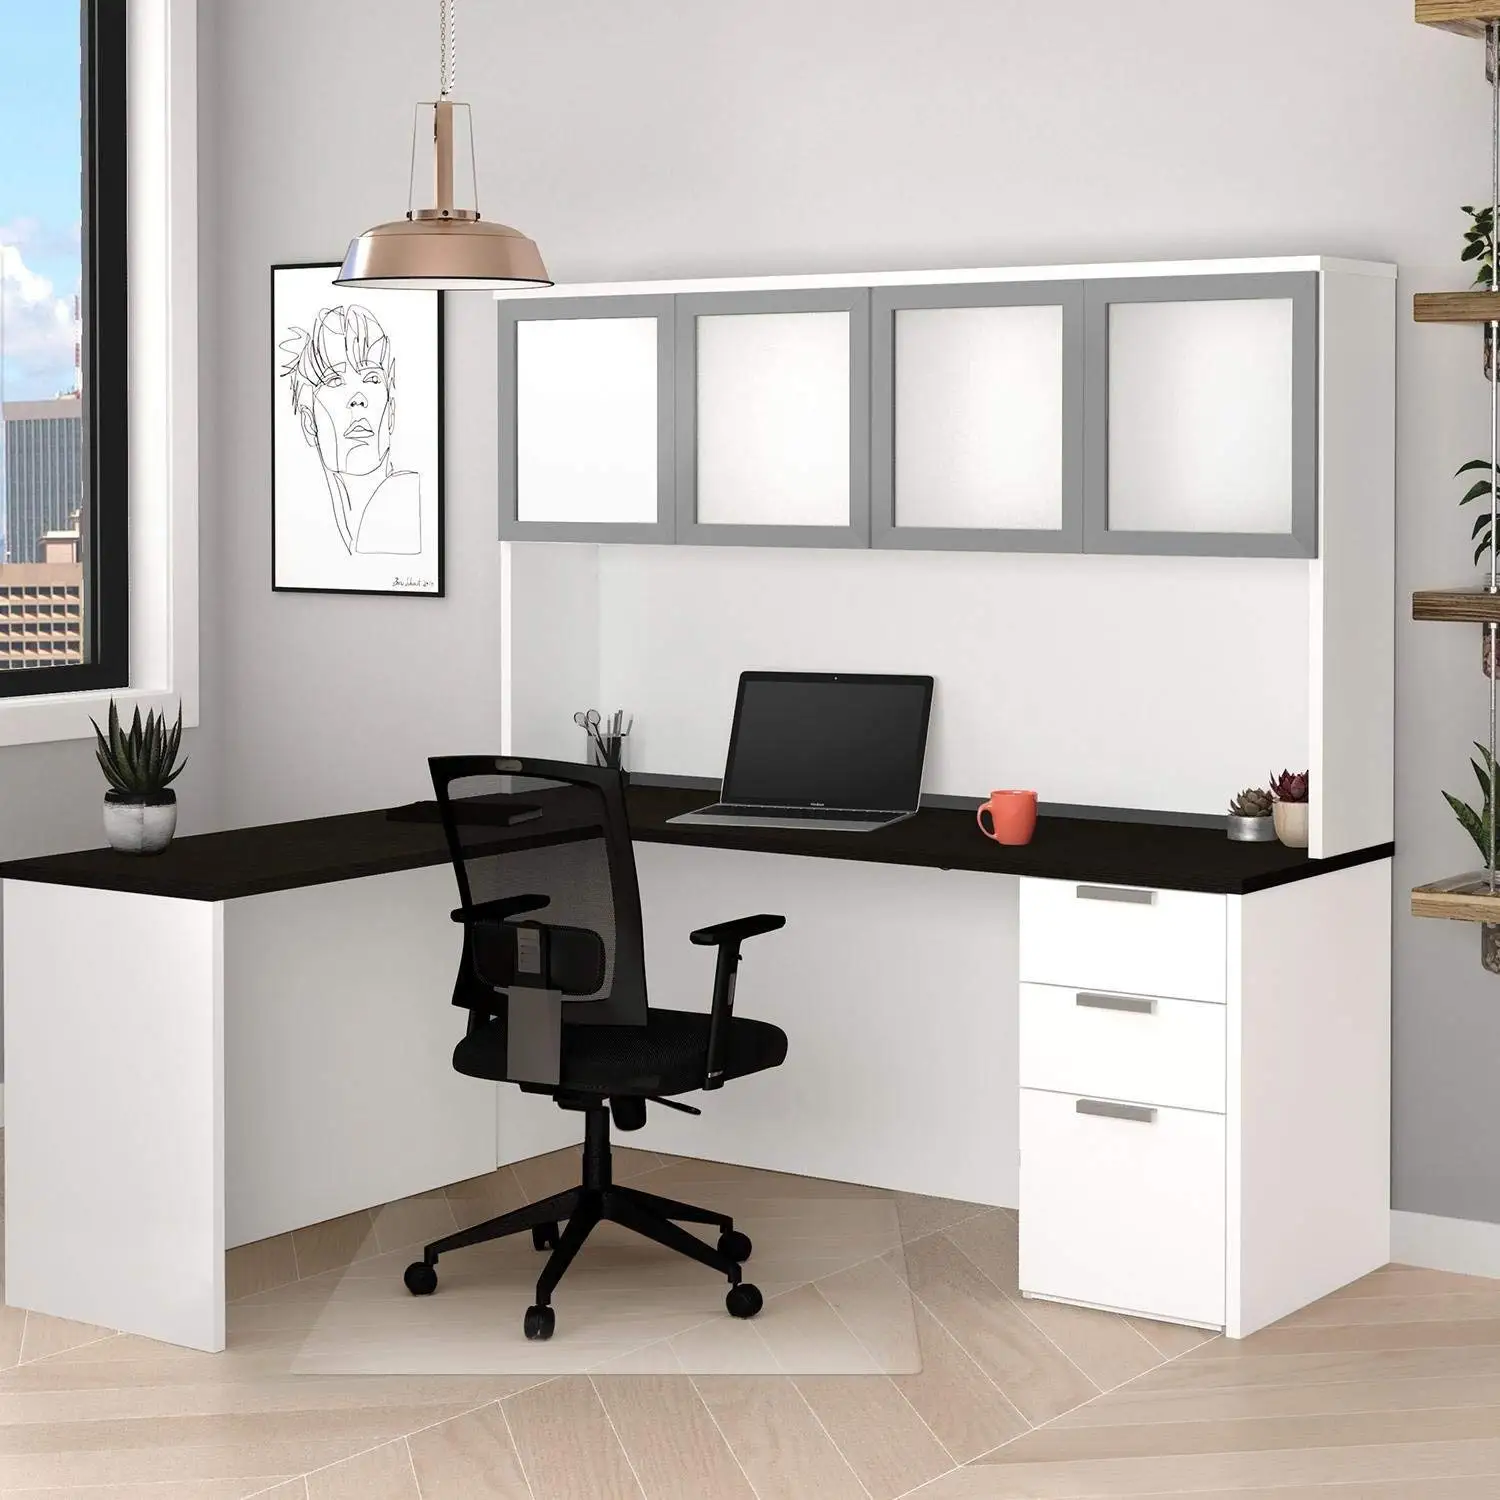 Office Chair Mat For Laminate Floor